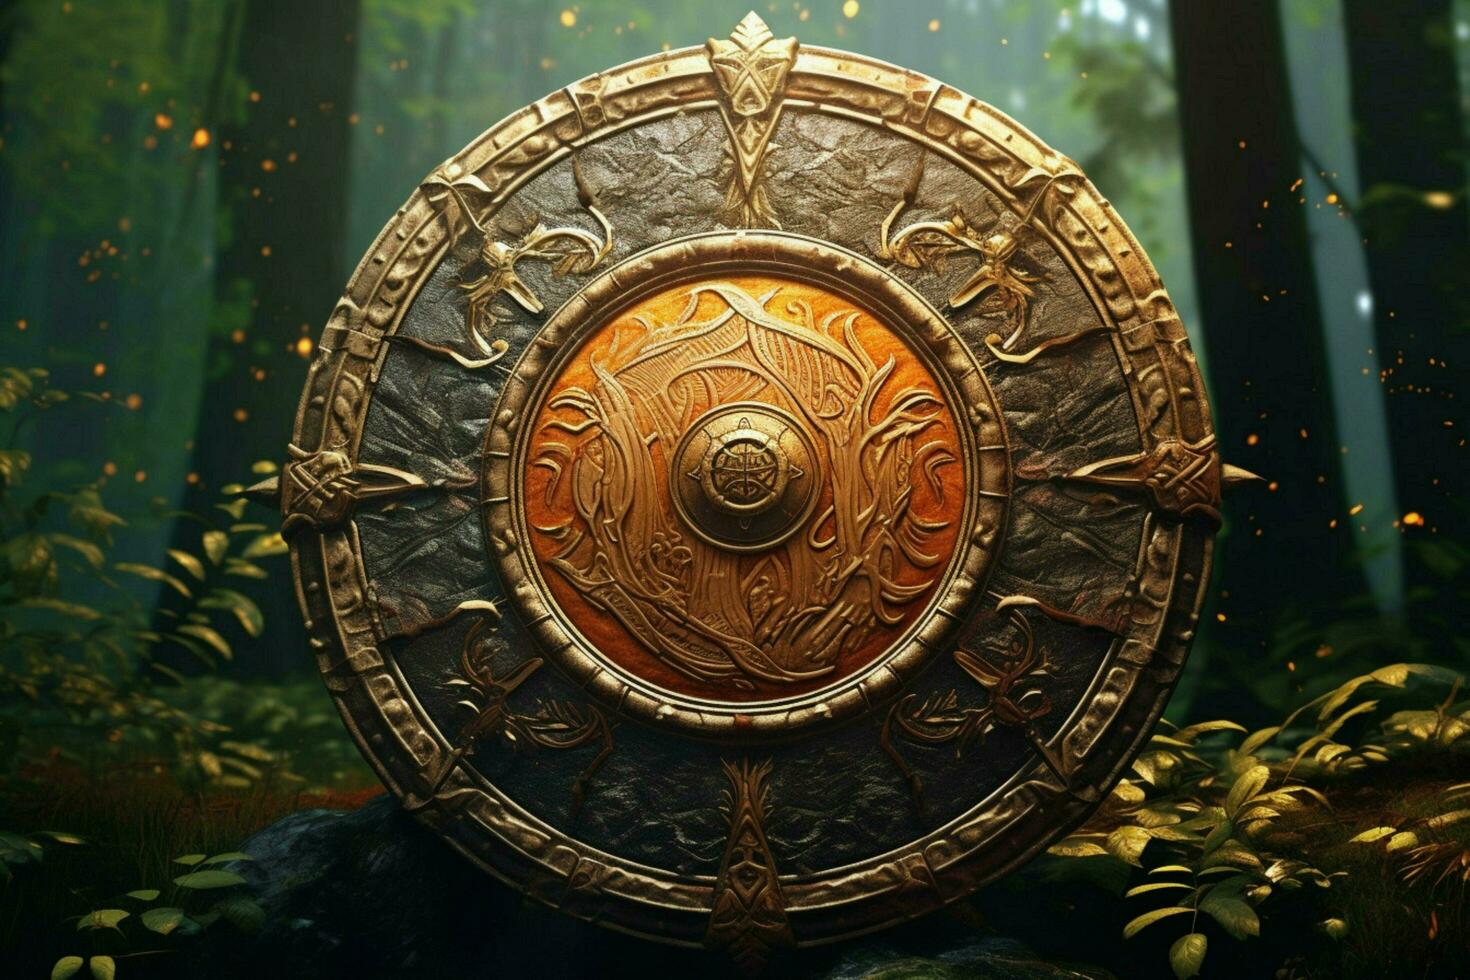 warrior round shield gaming fictional world photo